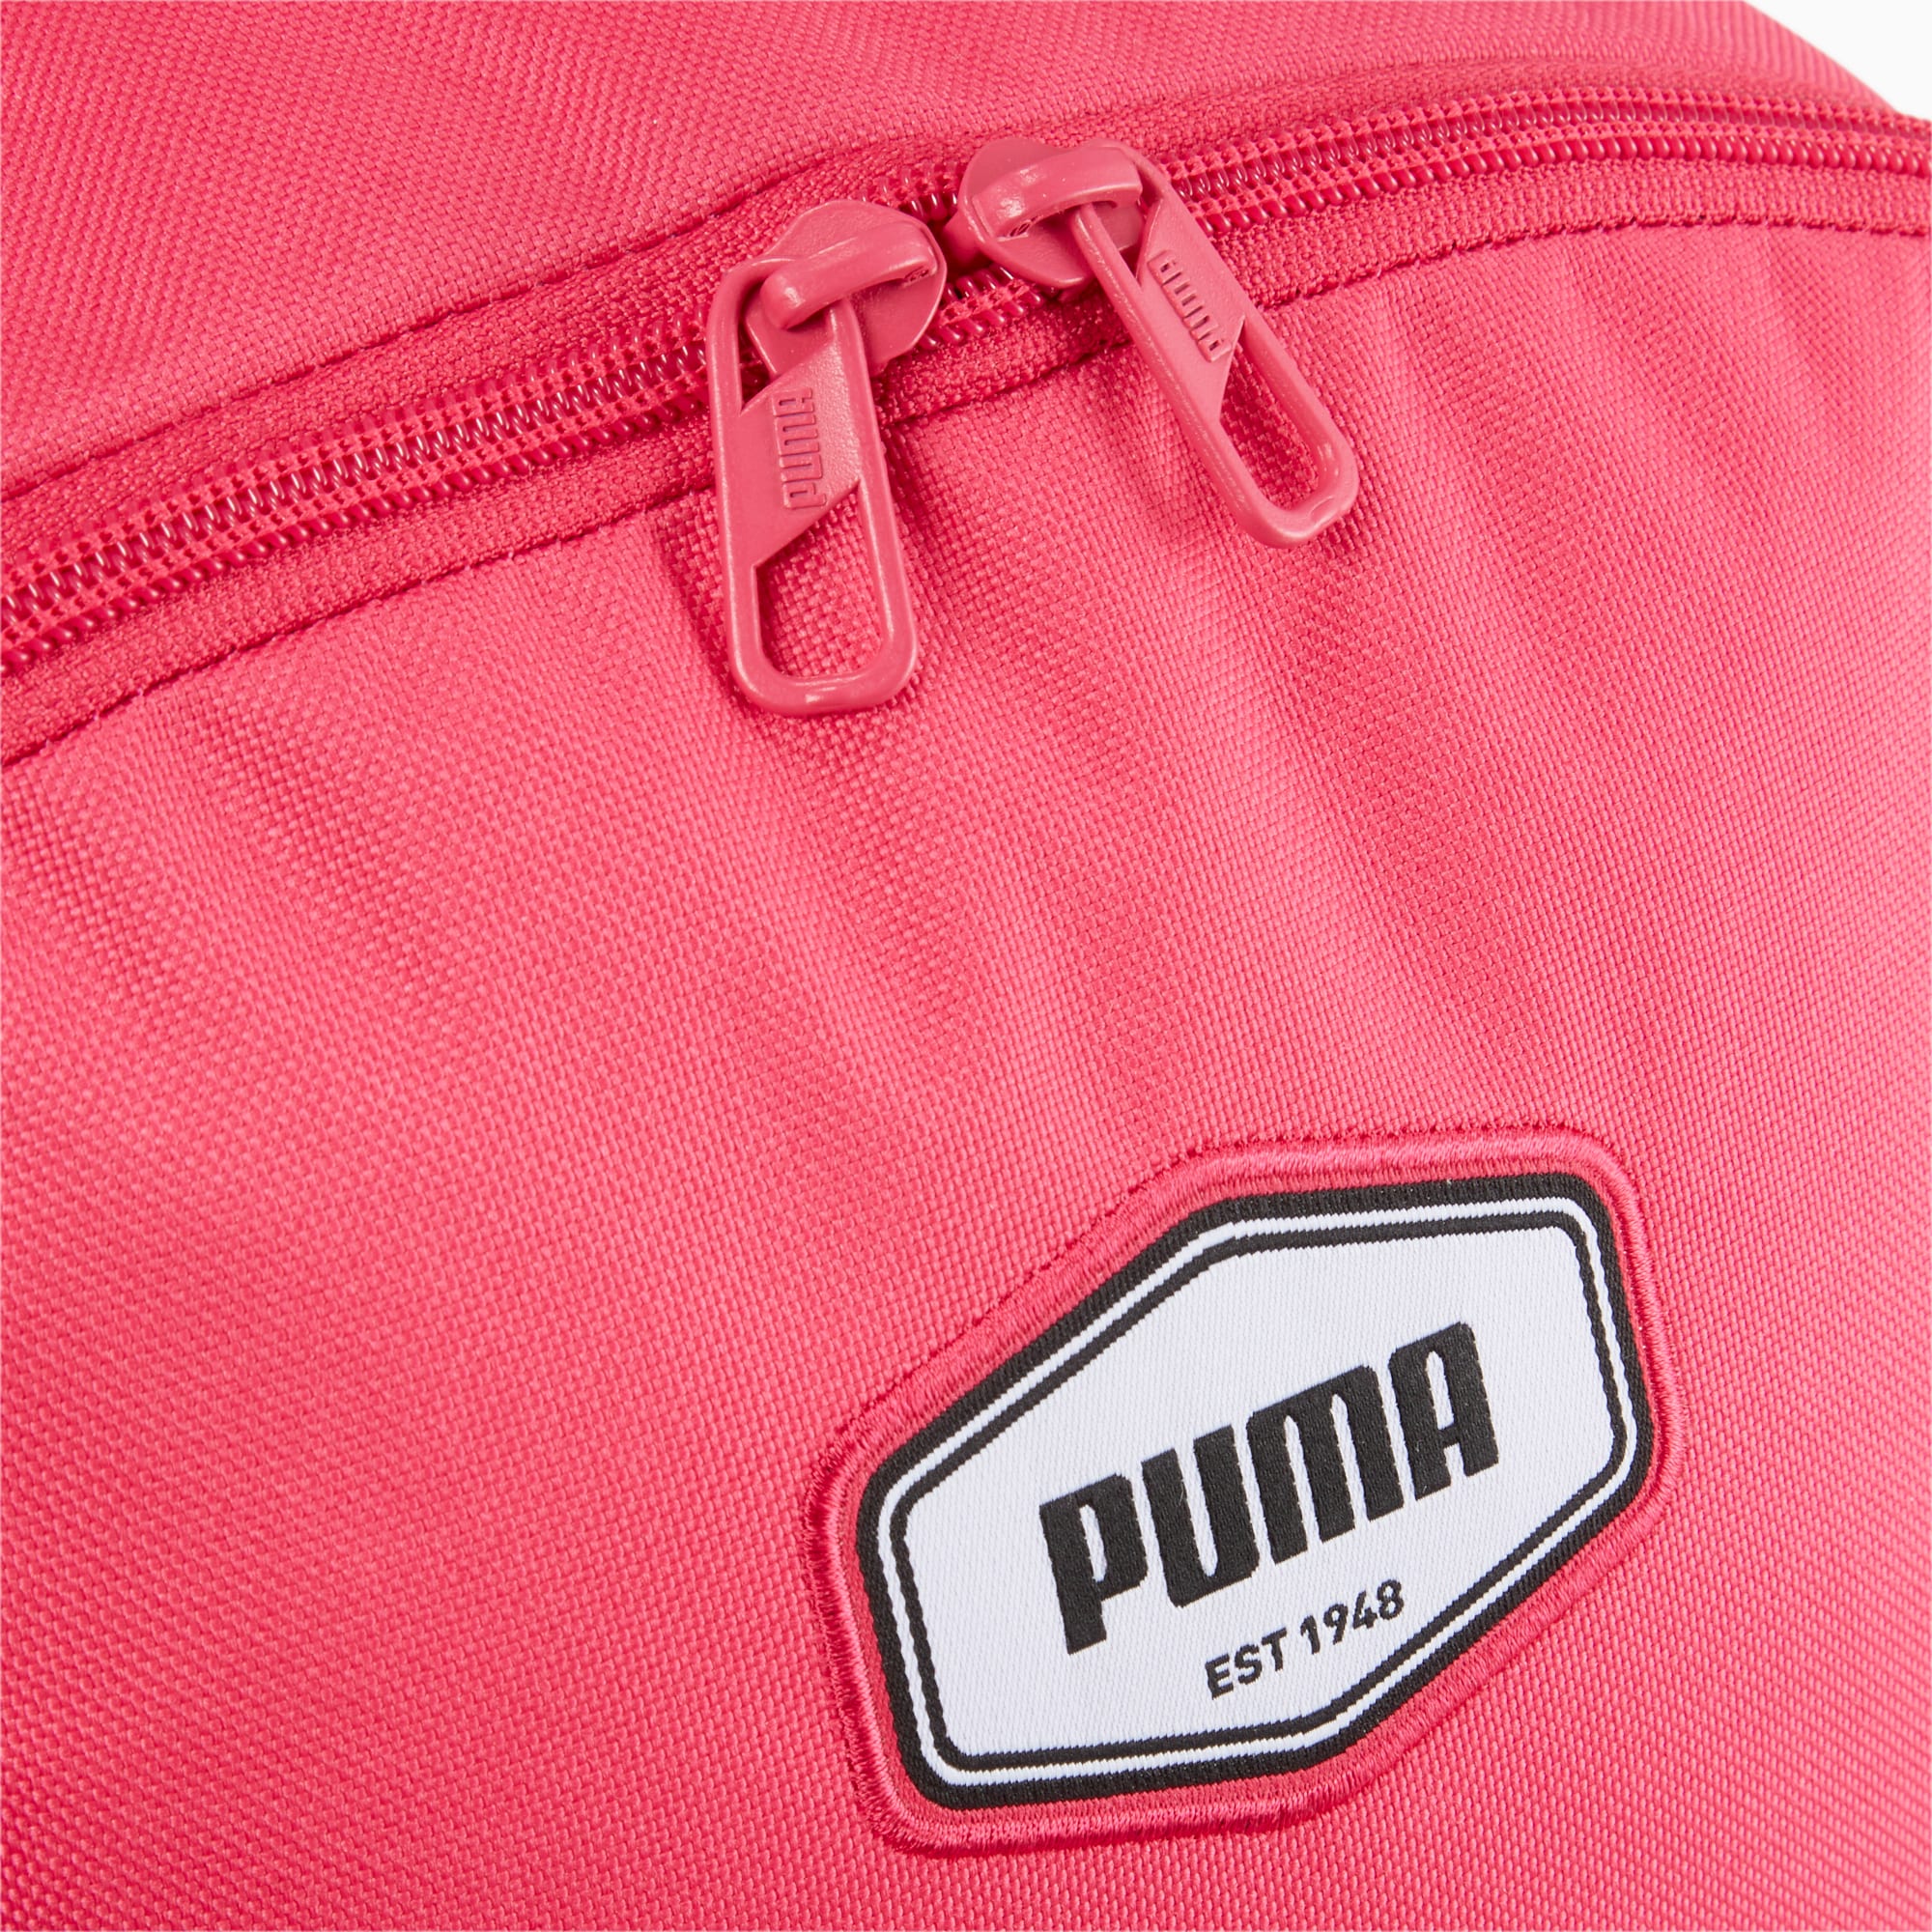 Women's PUMA Patch Backpack, Garnet Rose, Accessories